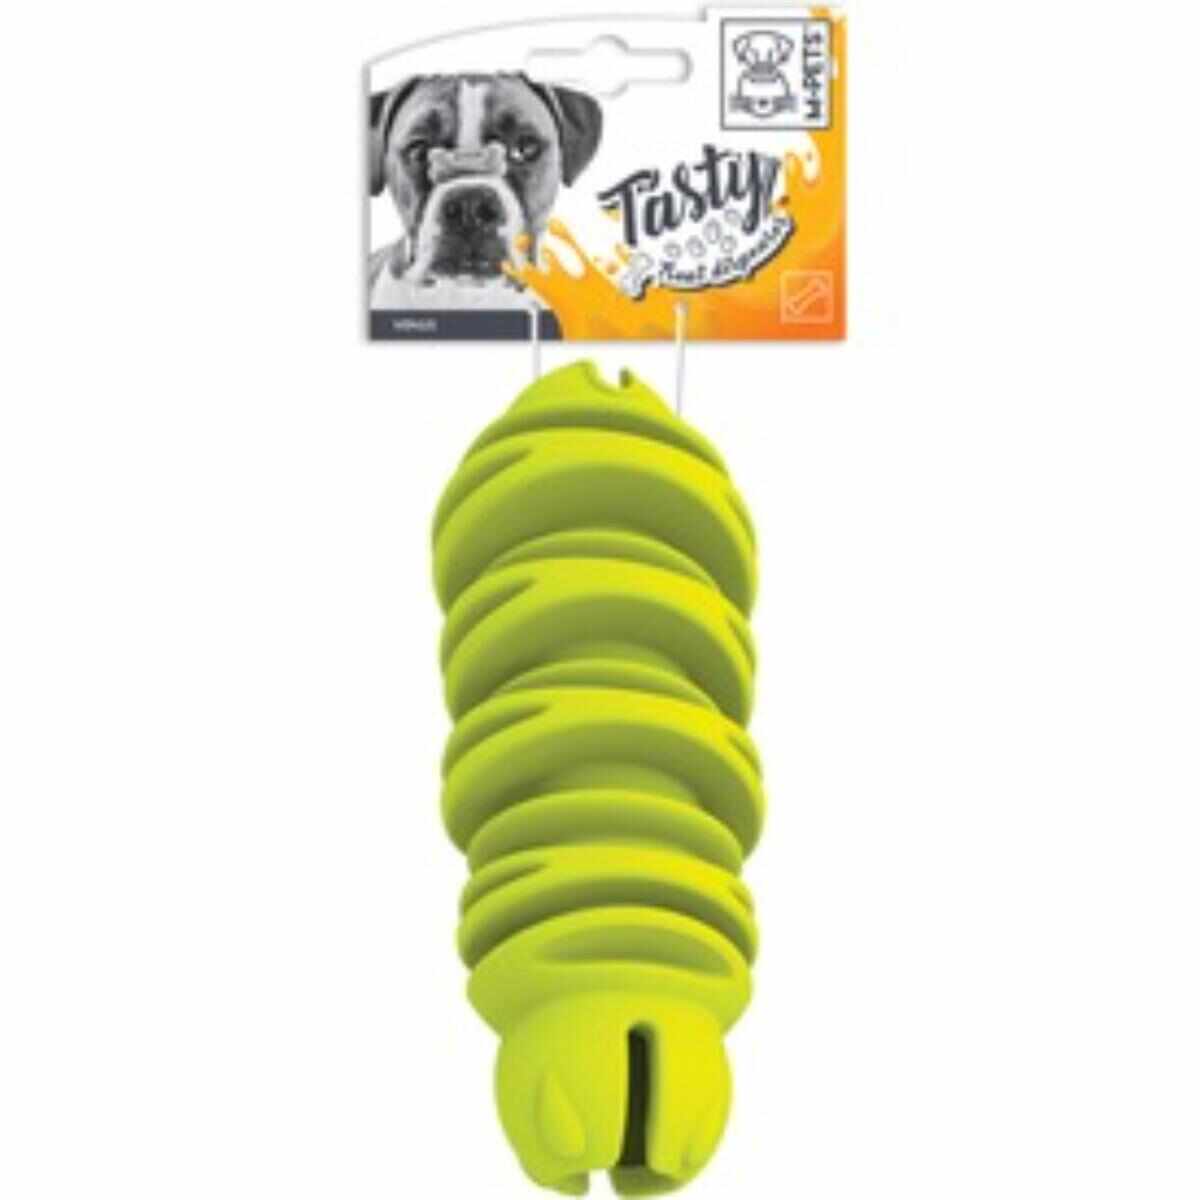 M-PETS Venus, jucărie interactivă câini S-L, eliberare recompense, dentiție, cauciuc, verde 6x6.1cm